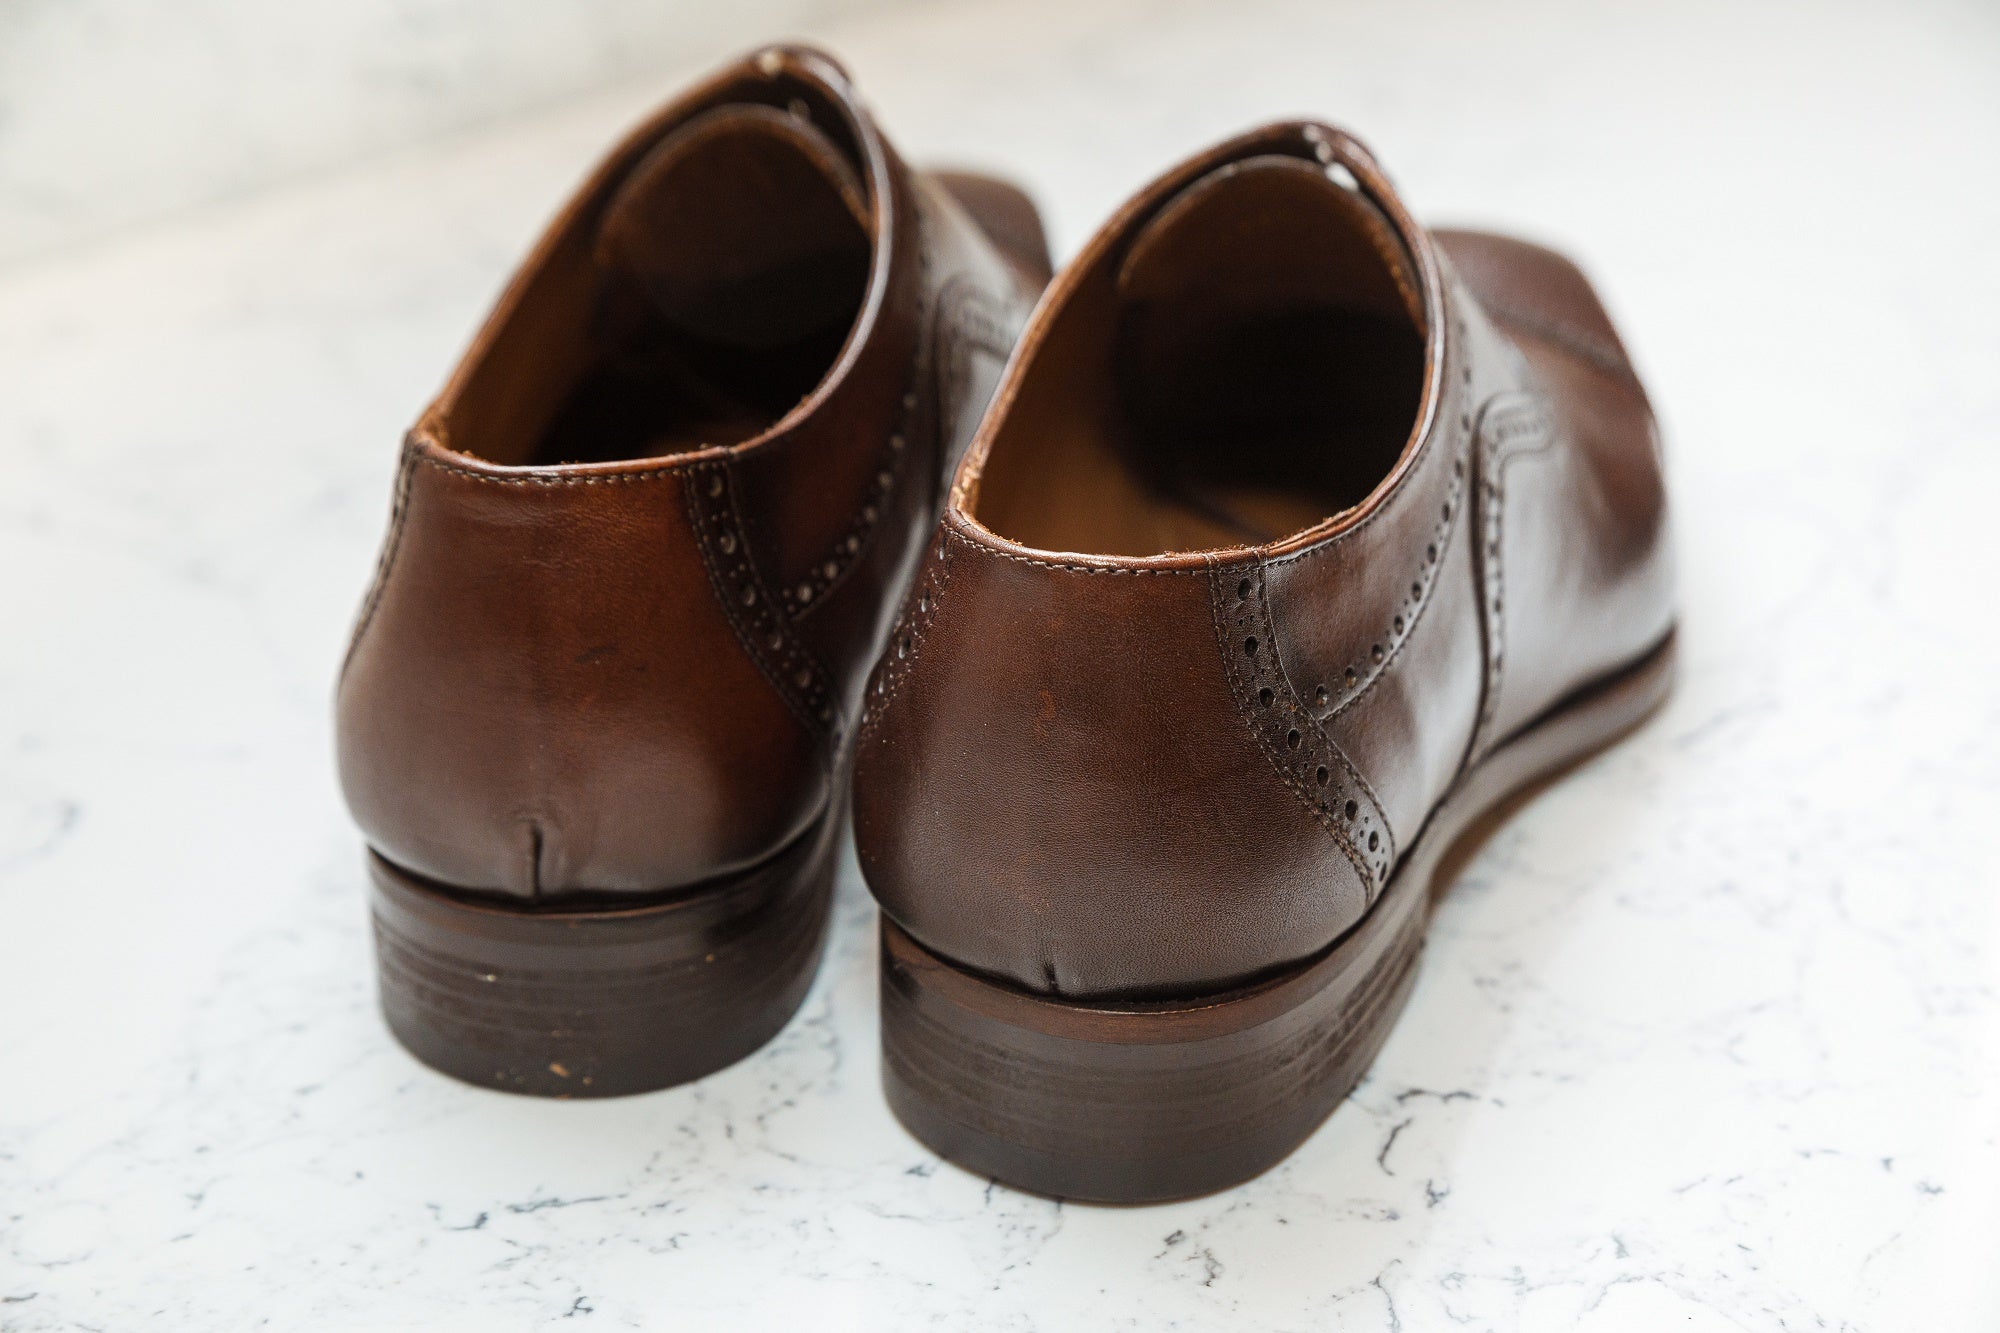 The Merkeni Shoes - Shoes by Urbbana